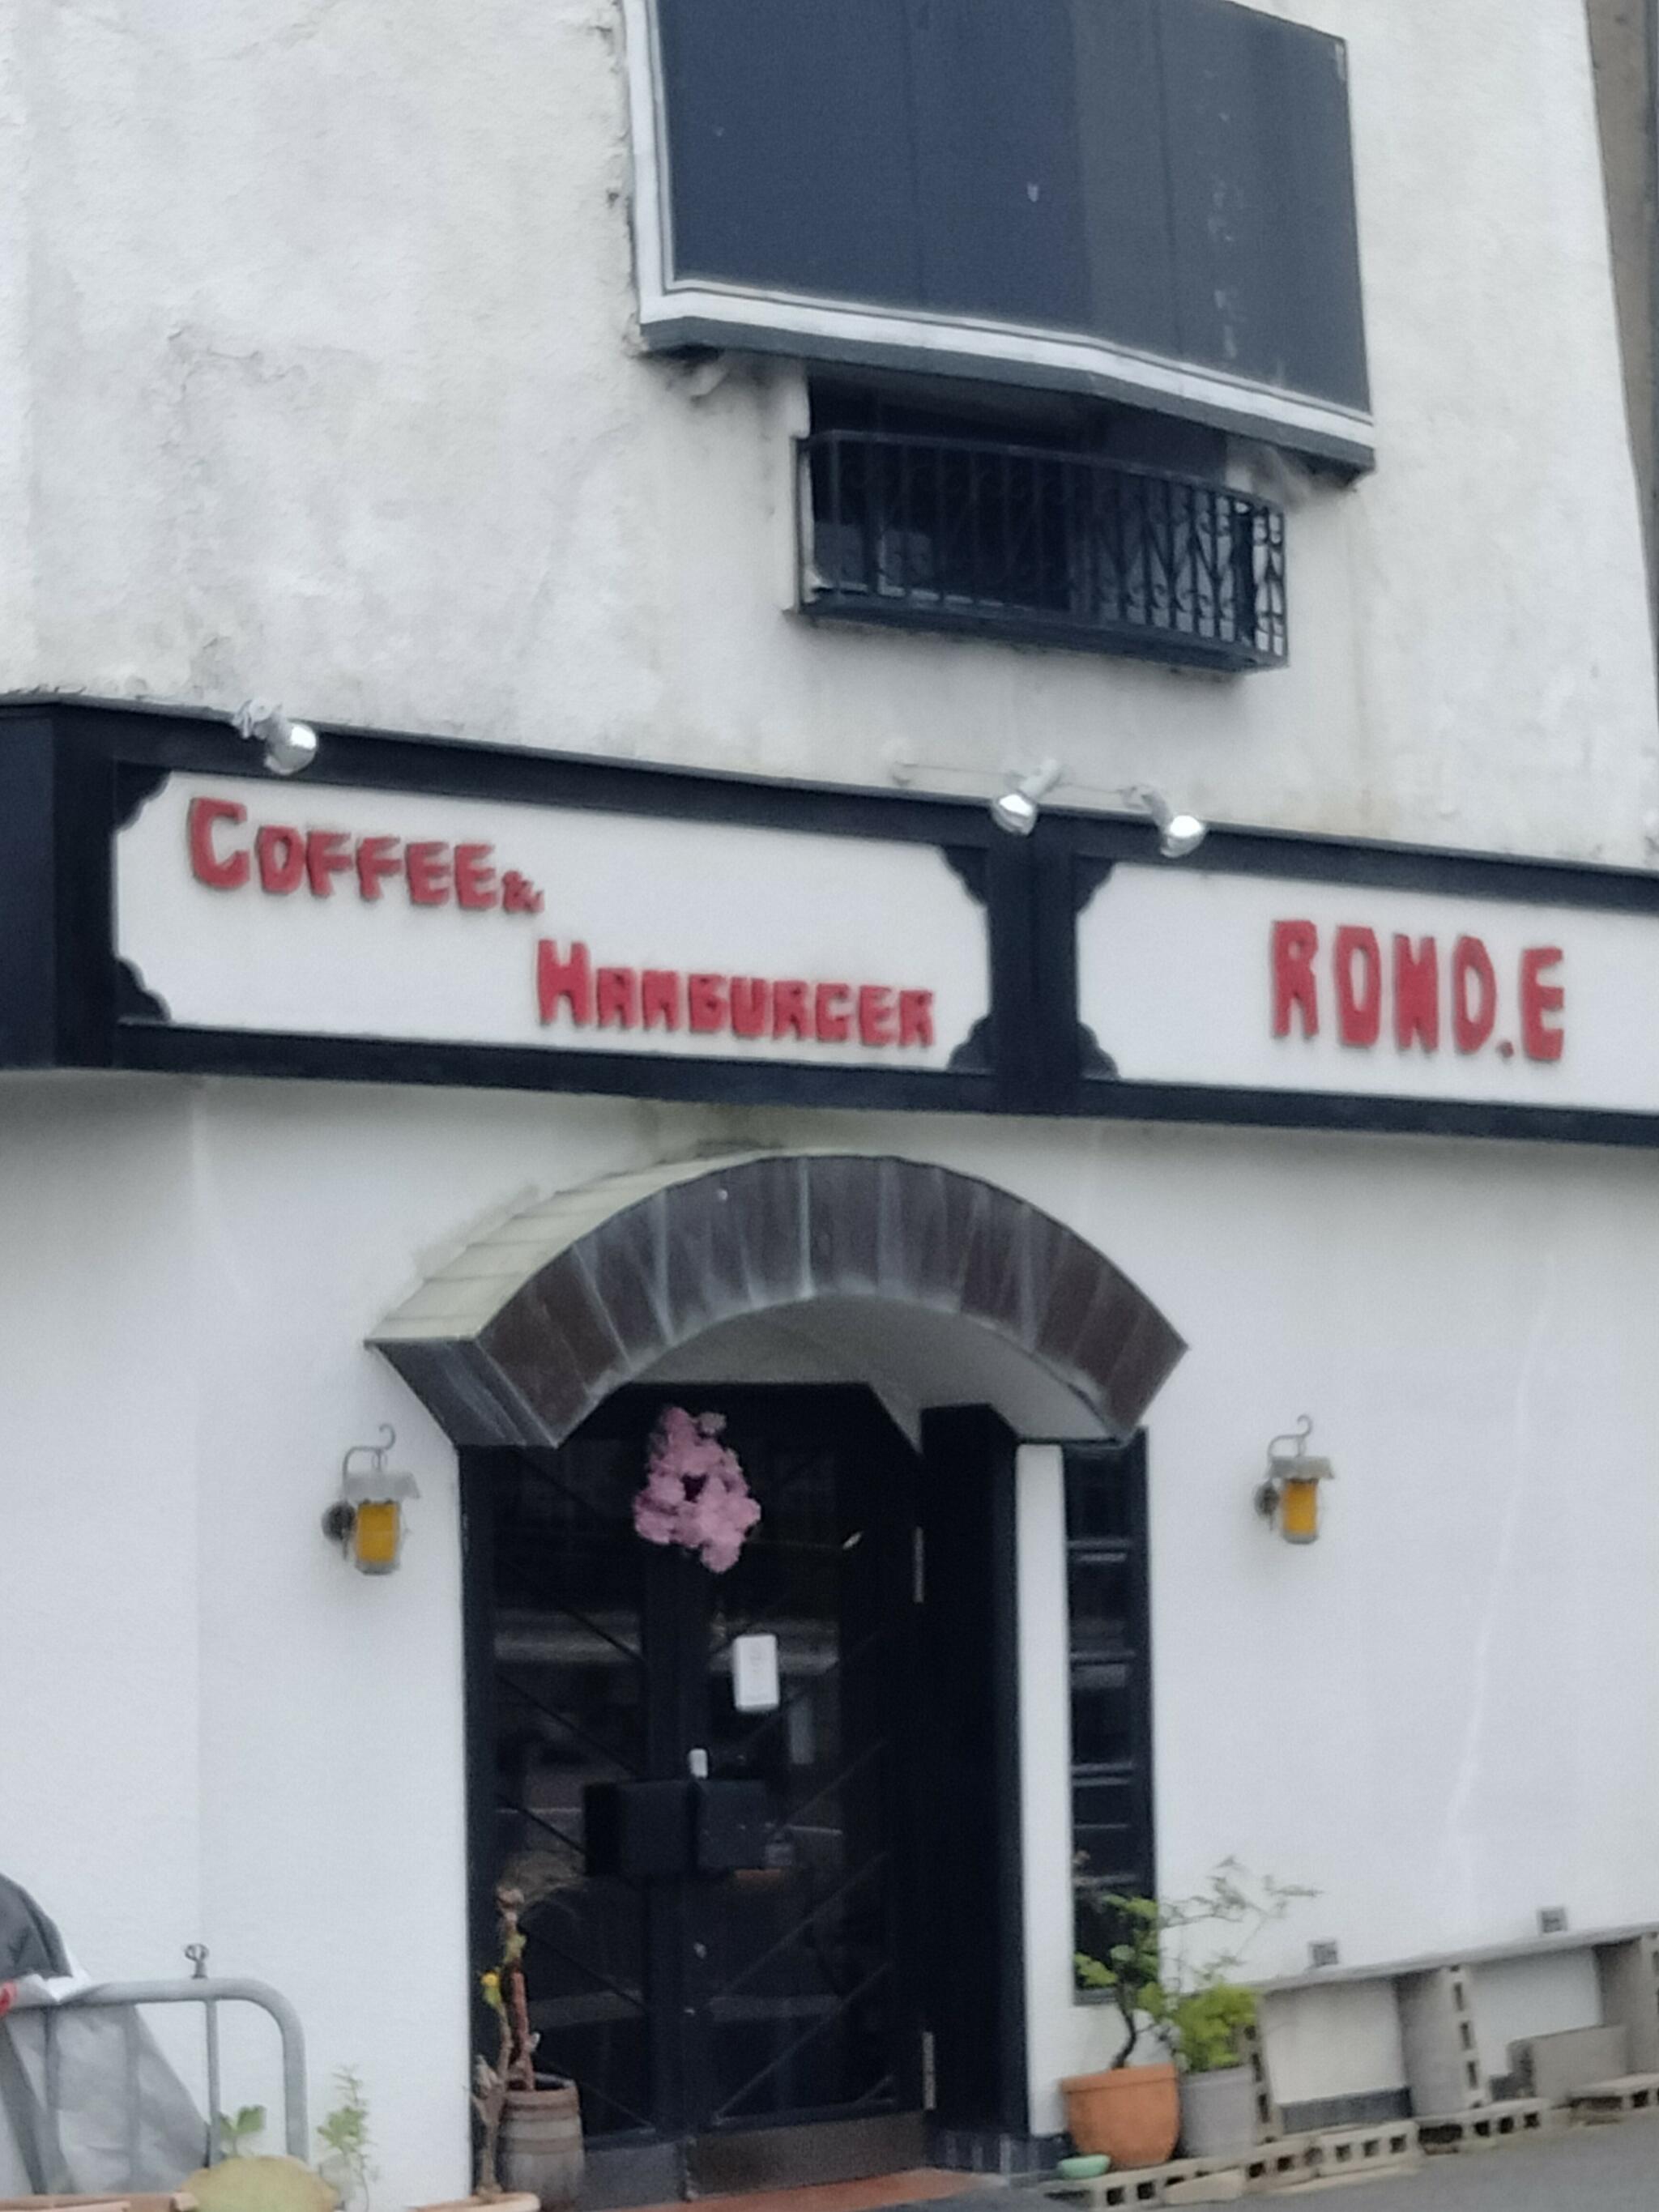 COFFEE&HUMBURGER ROND.Eの代表写真10